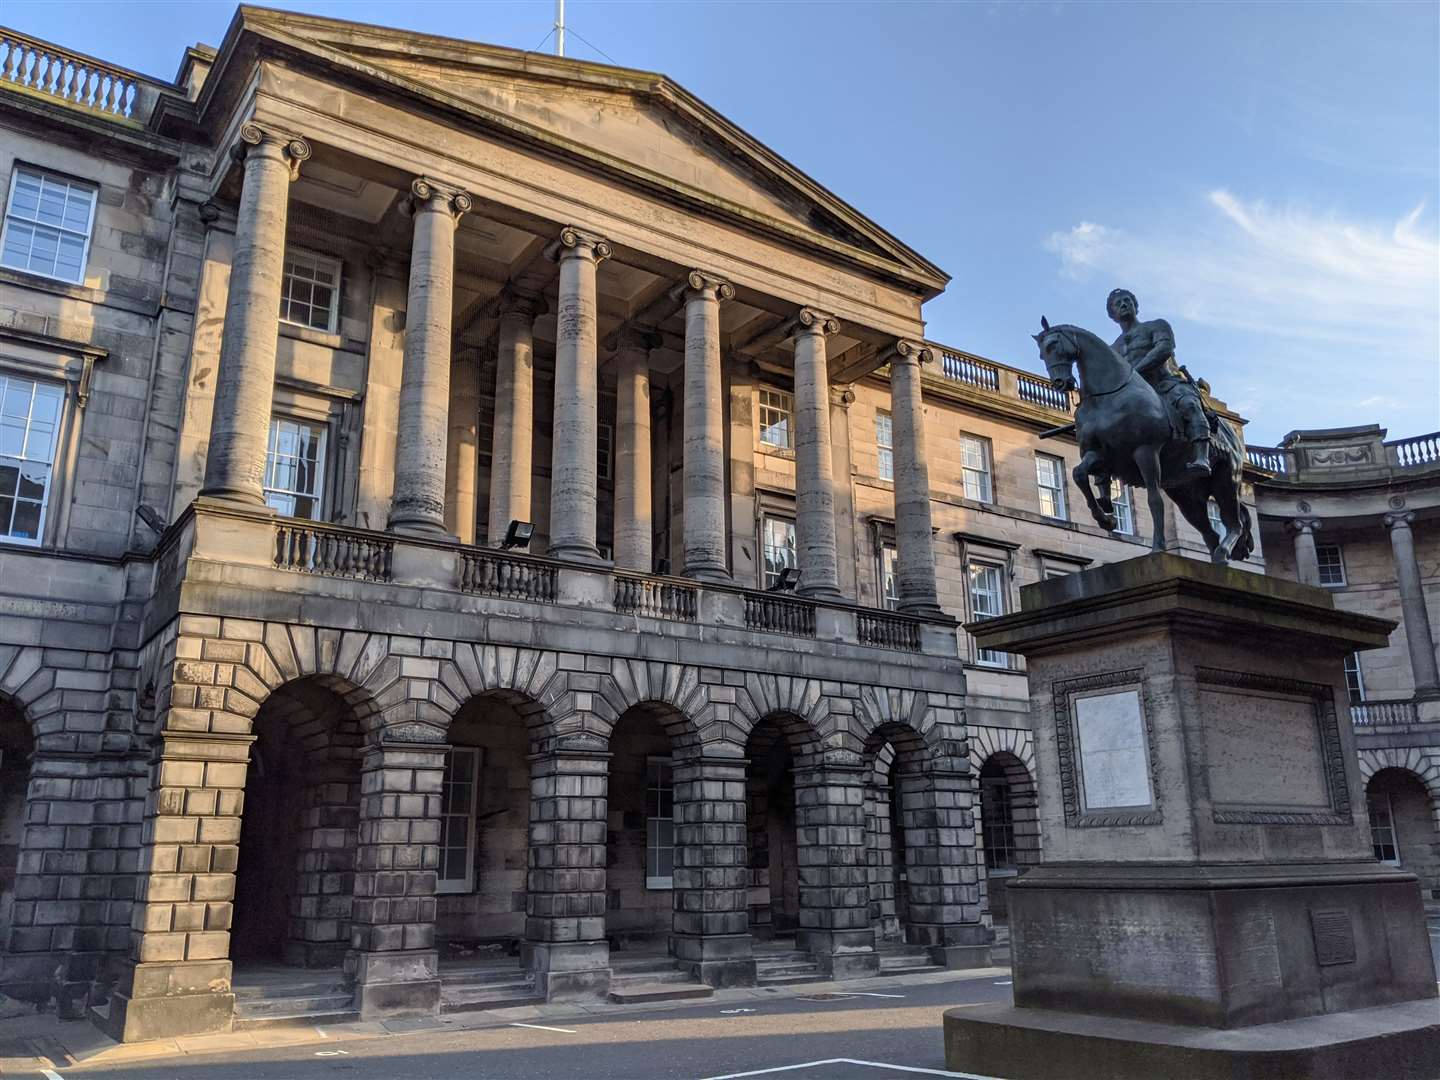 Court of Session Edinburgh